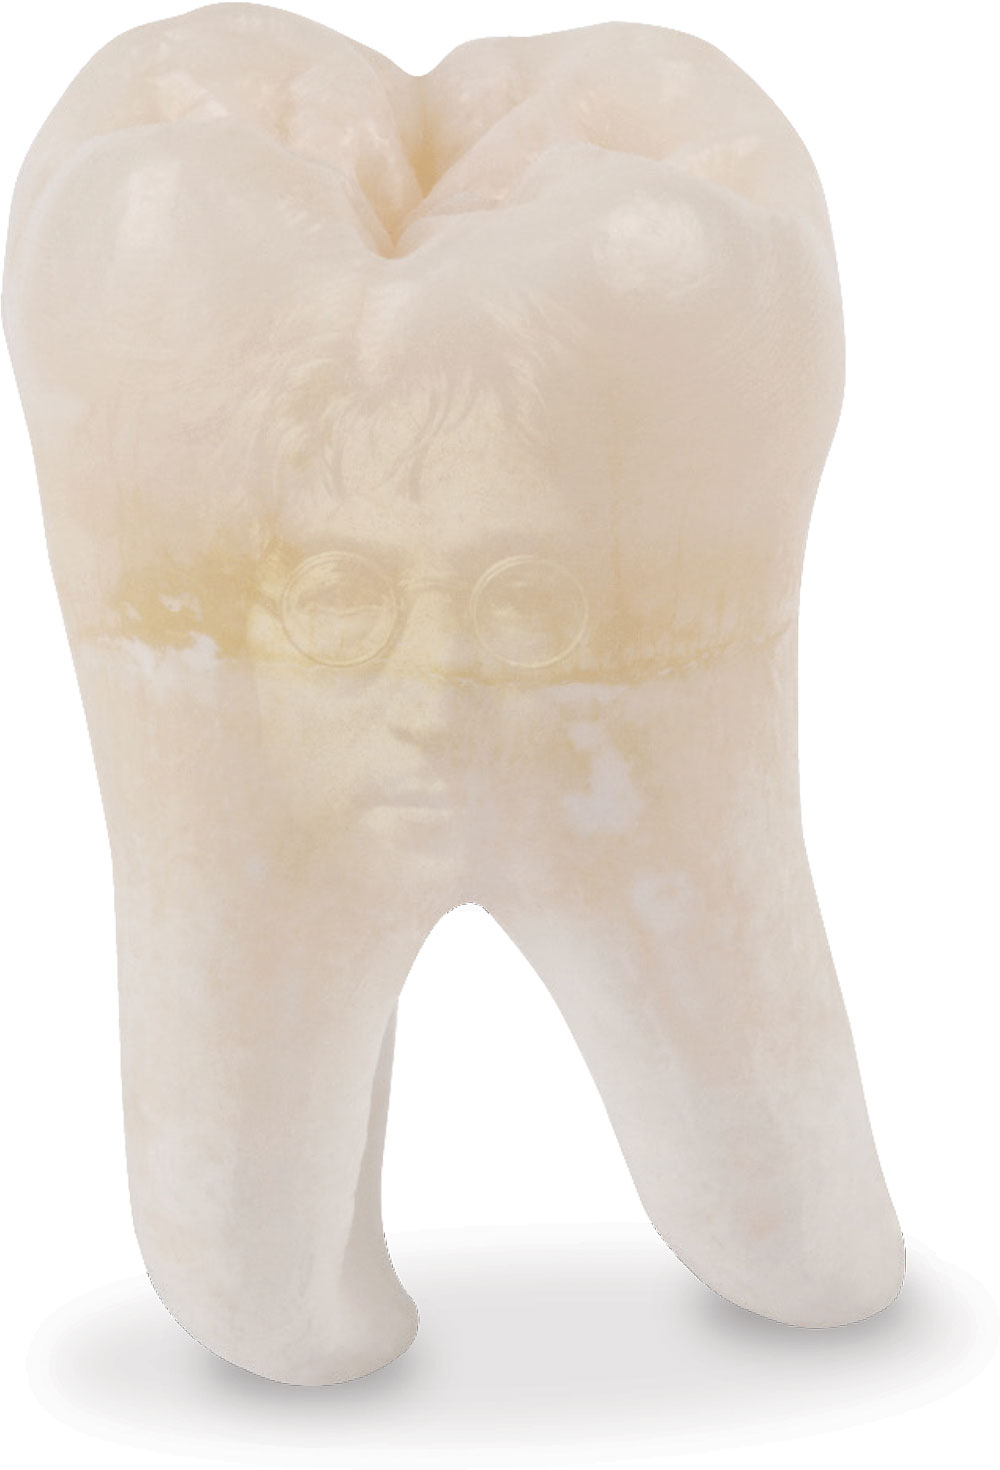 The molar of Beatles icon John Lennon